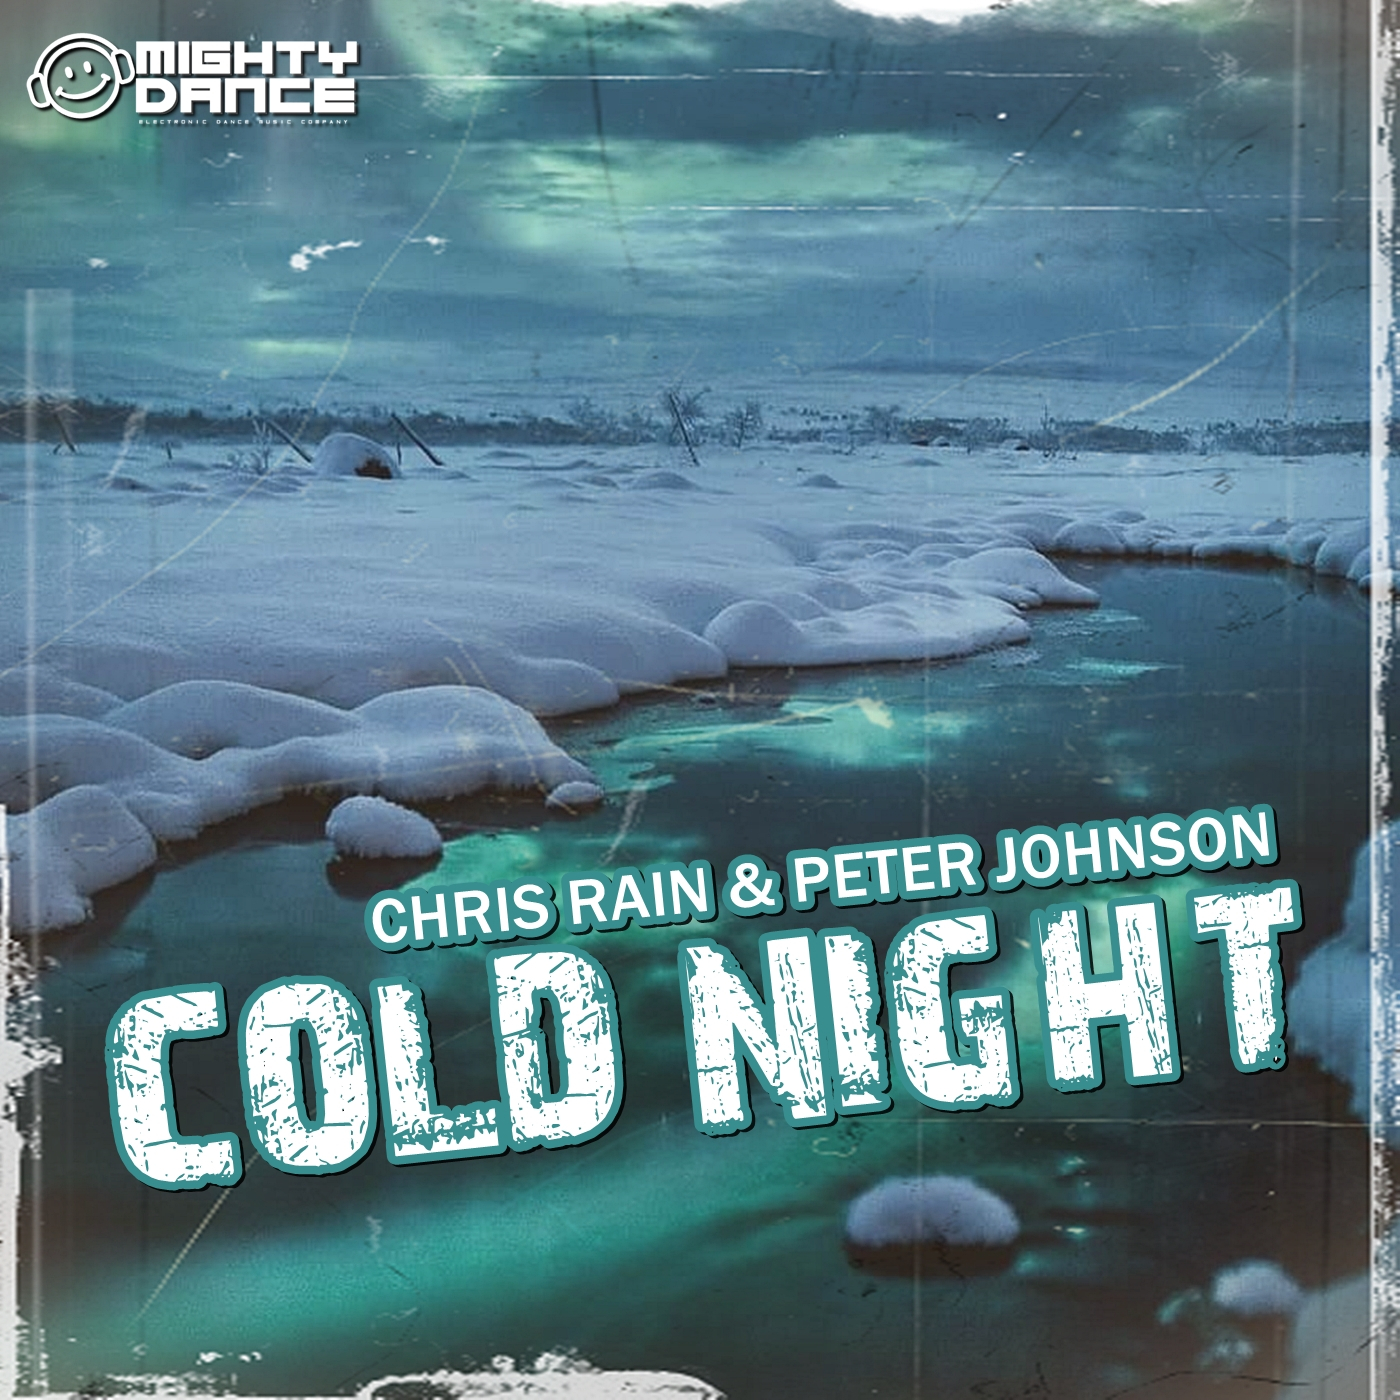 Cold nights 1. Chris Rain. Cold Night. Born Alone Chris Rain. Cold at Night.